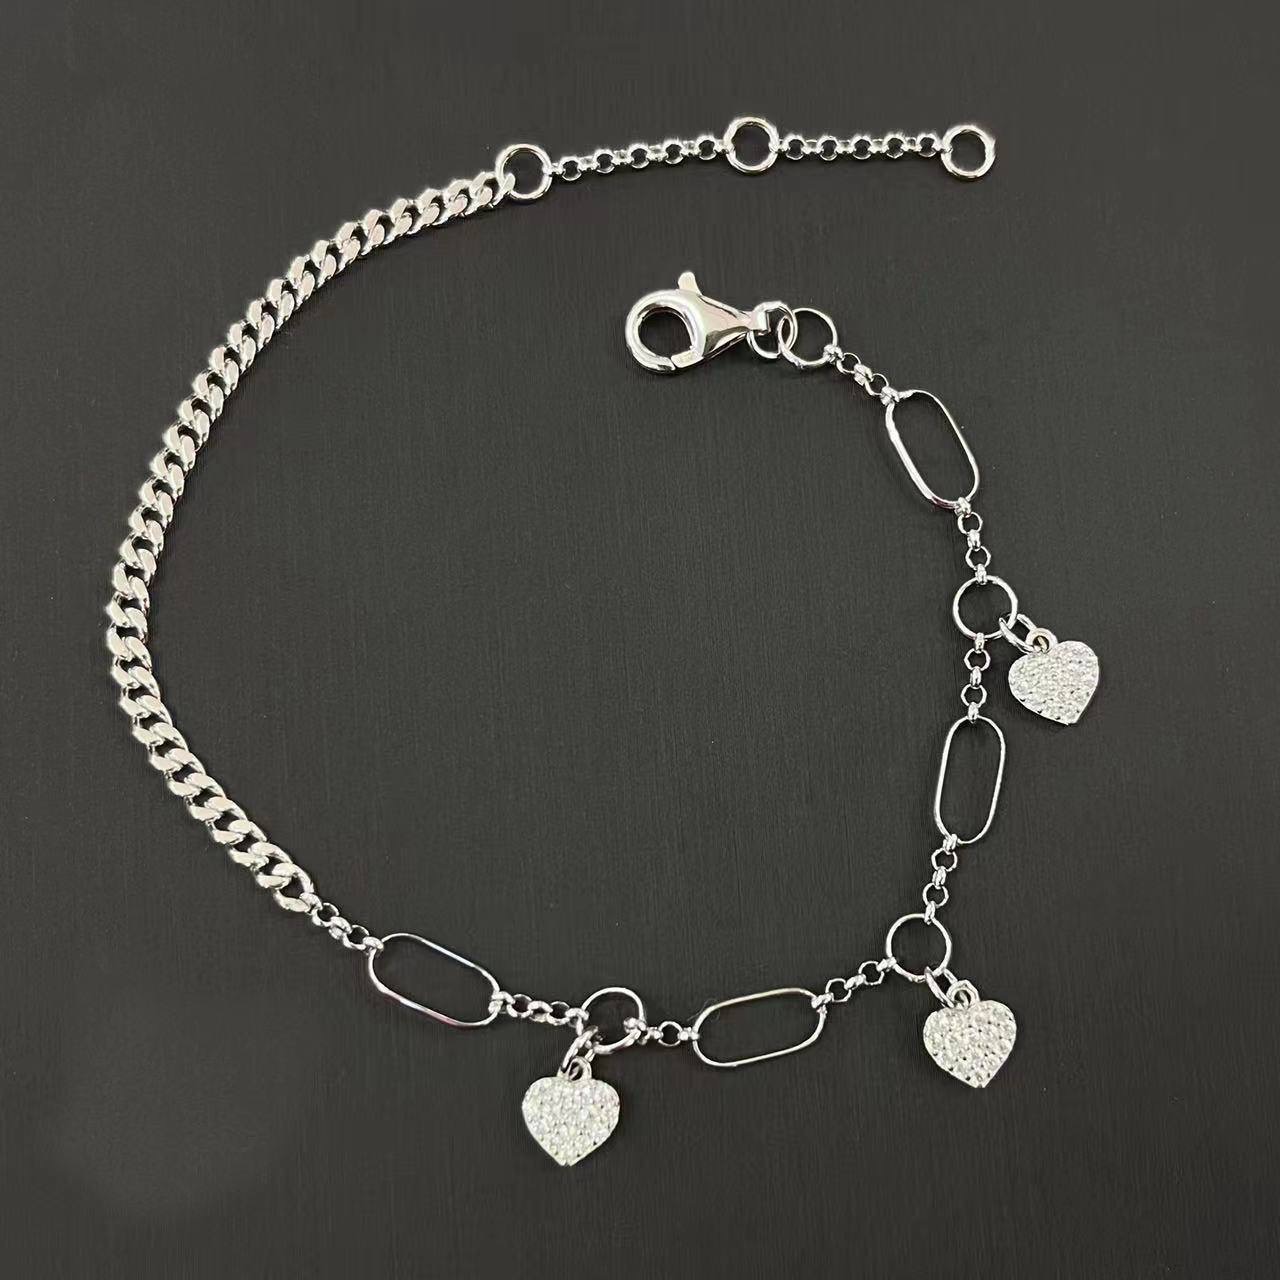 Elegant 925 Silver Bracelet Studded With Sparkling Zircon Stones